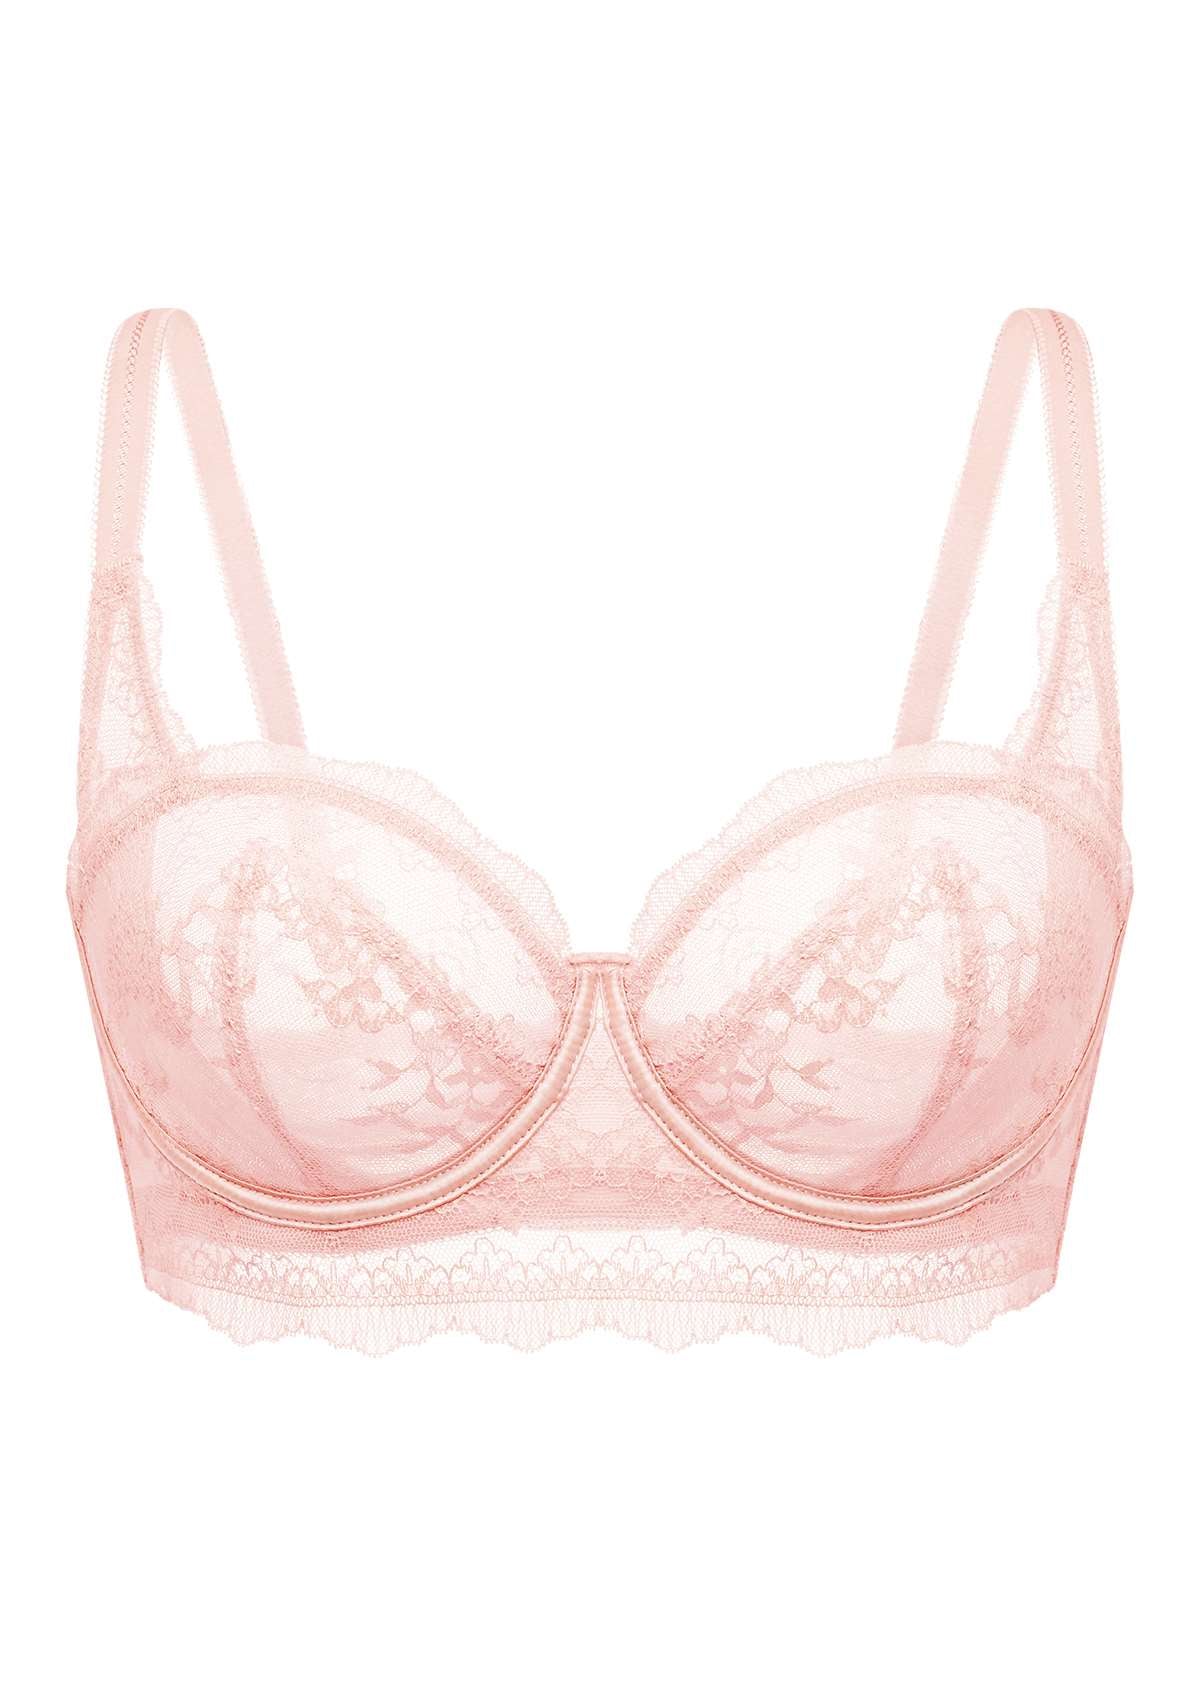 HSIA Floral Lace Unlined Bridal Balconette Delicate Bra Panty Set - Pink / 42 / D